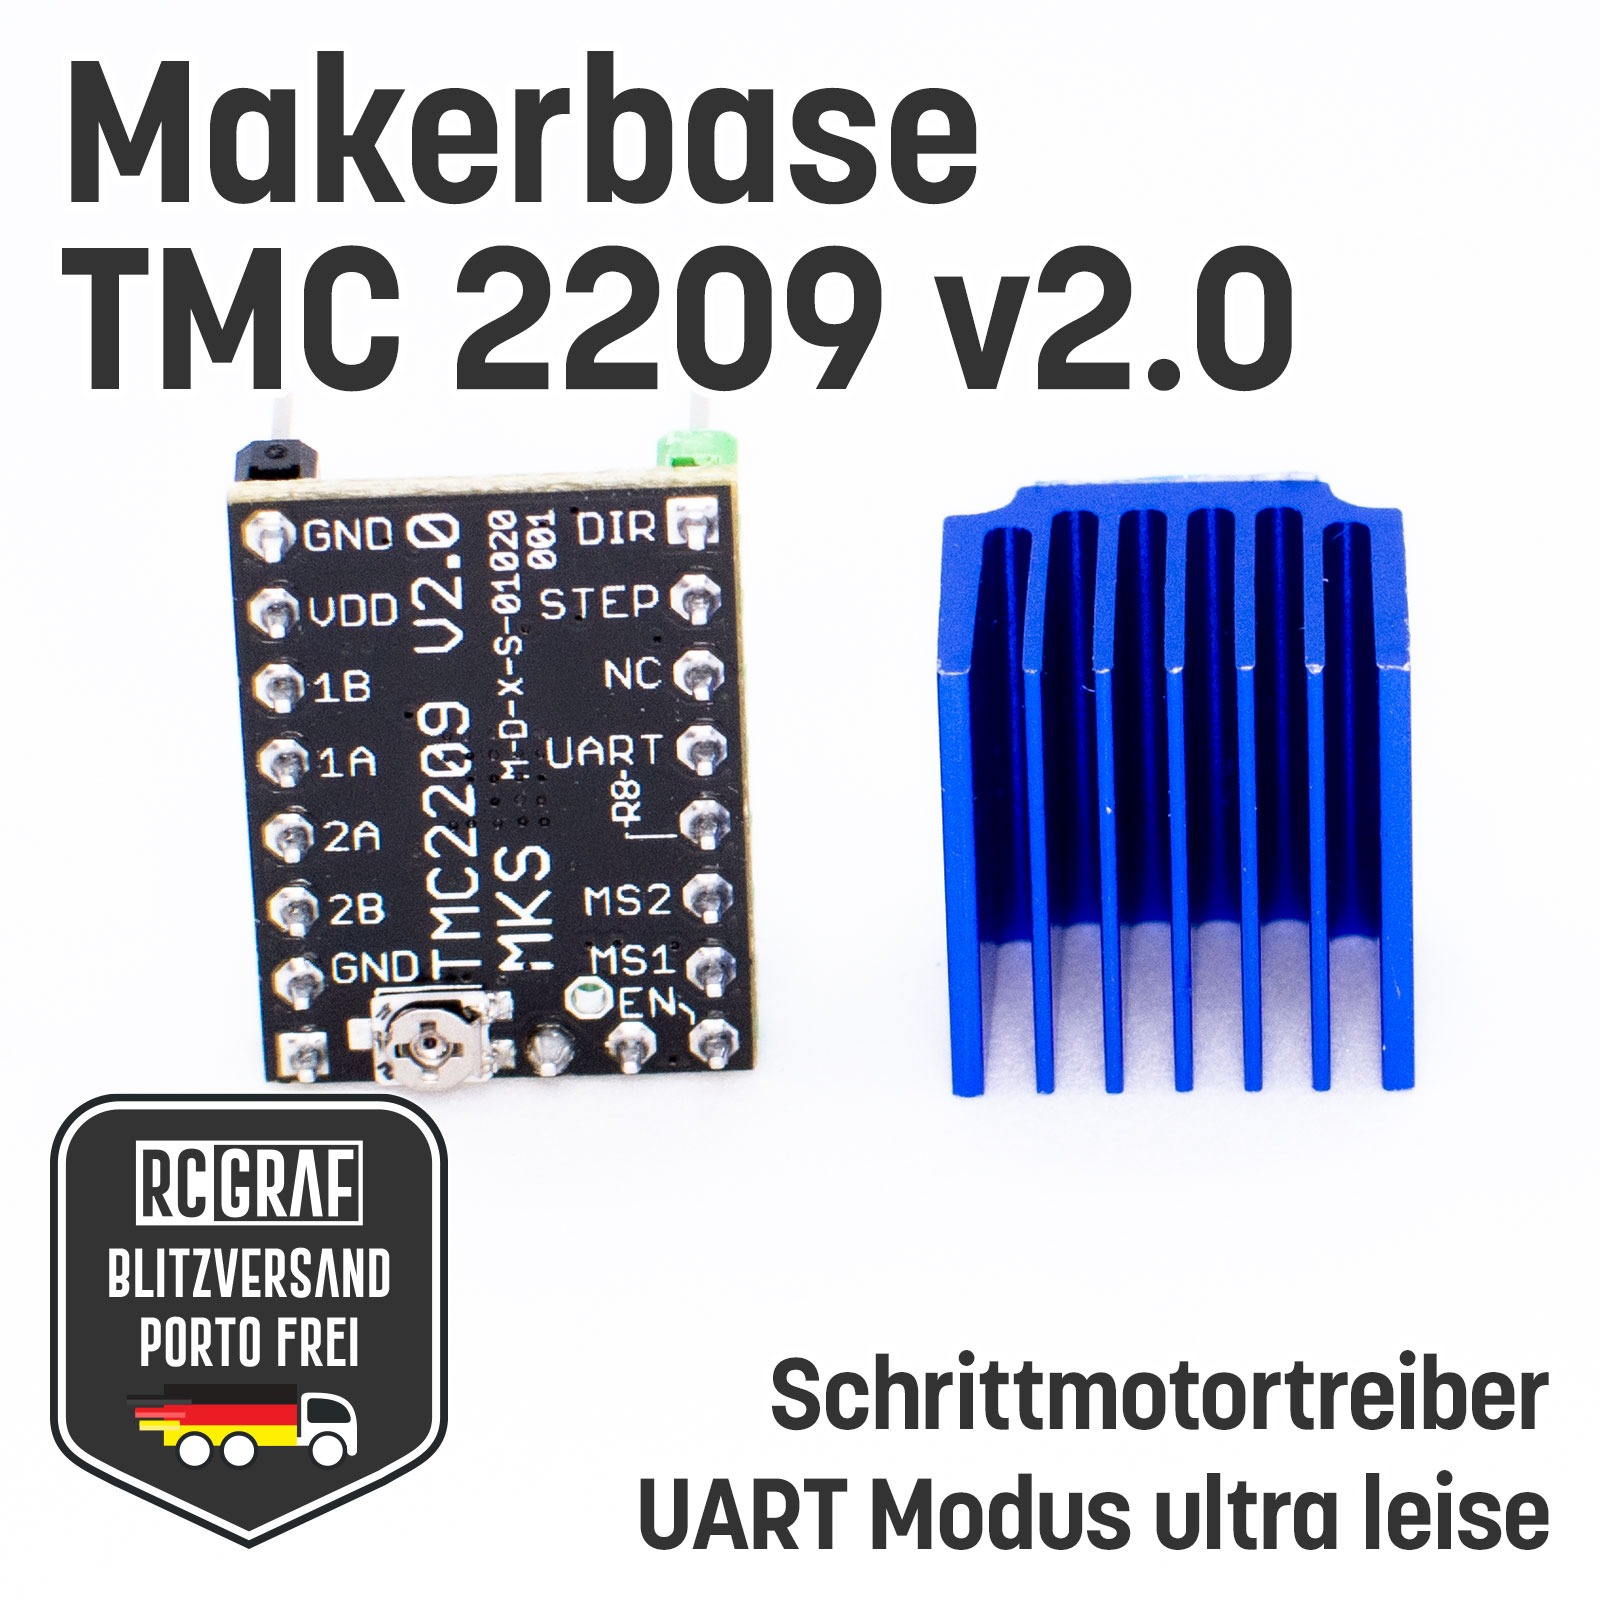 Makerbase TMC2209 V2.0 Schrittmotortreiber UART Modus ultra leise 2